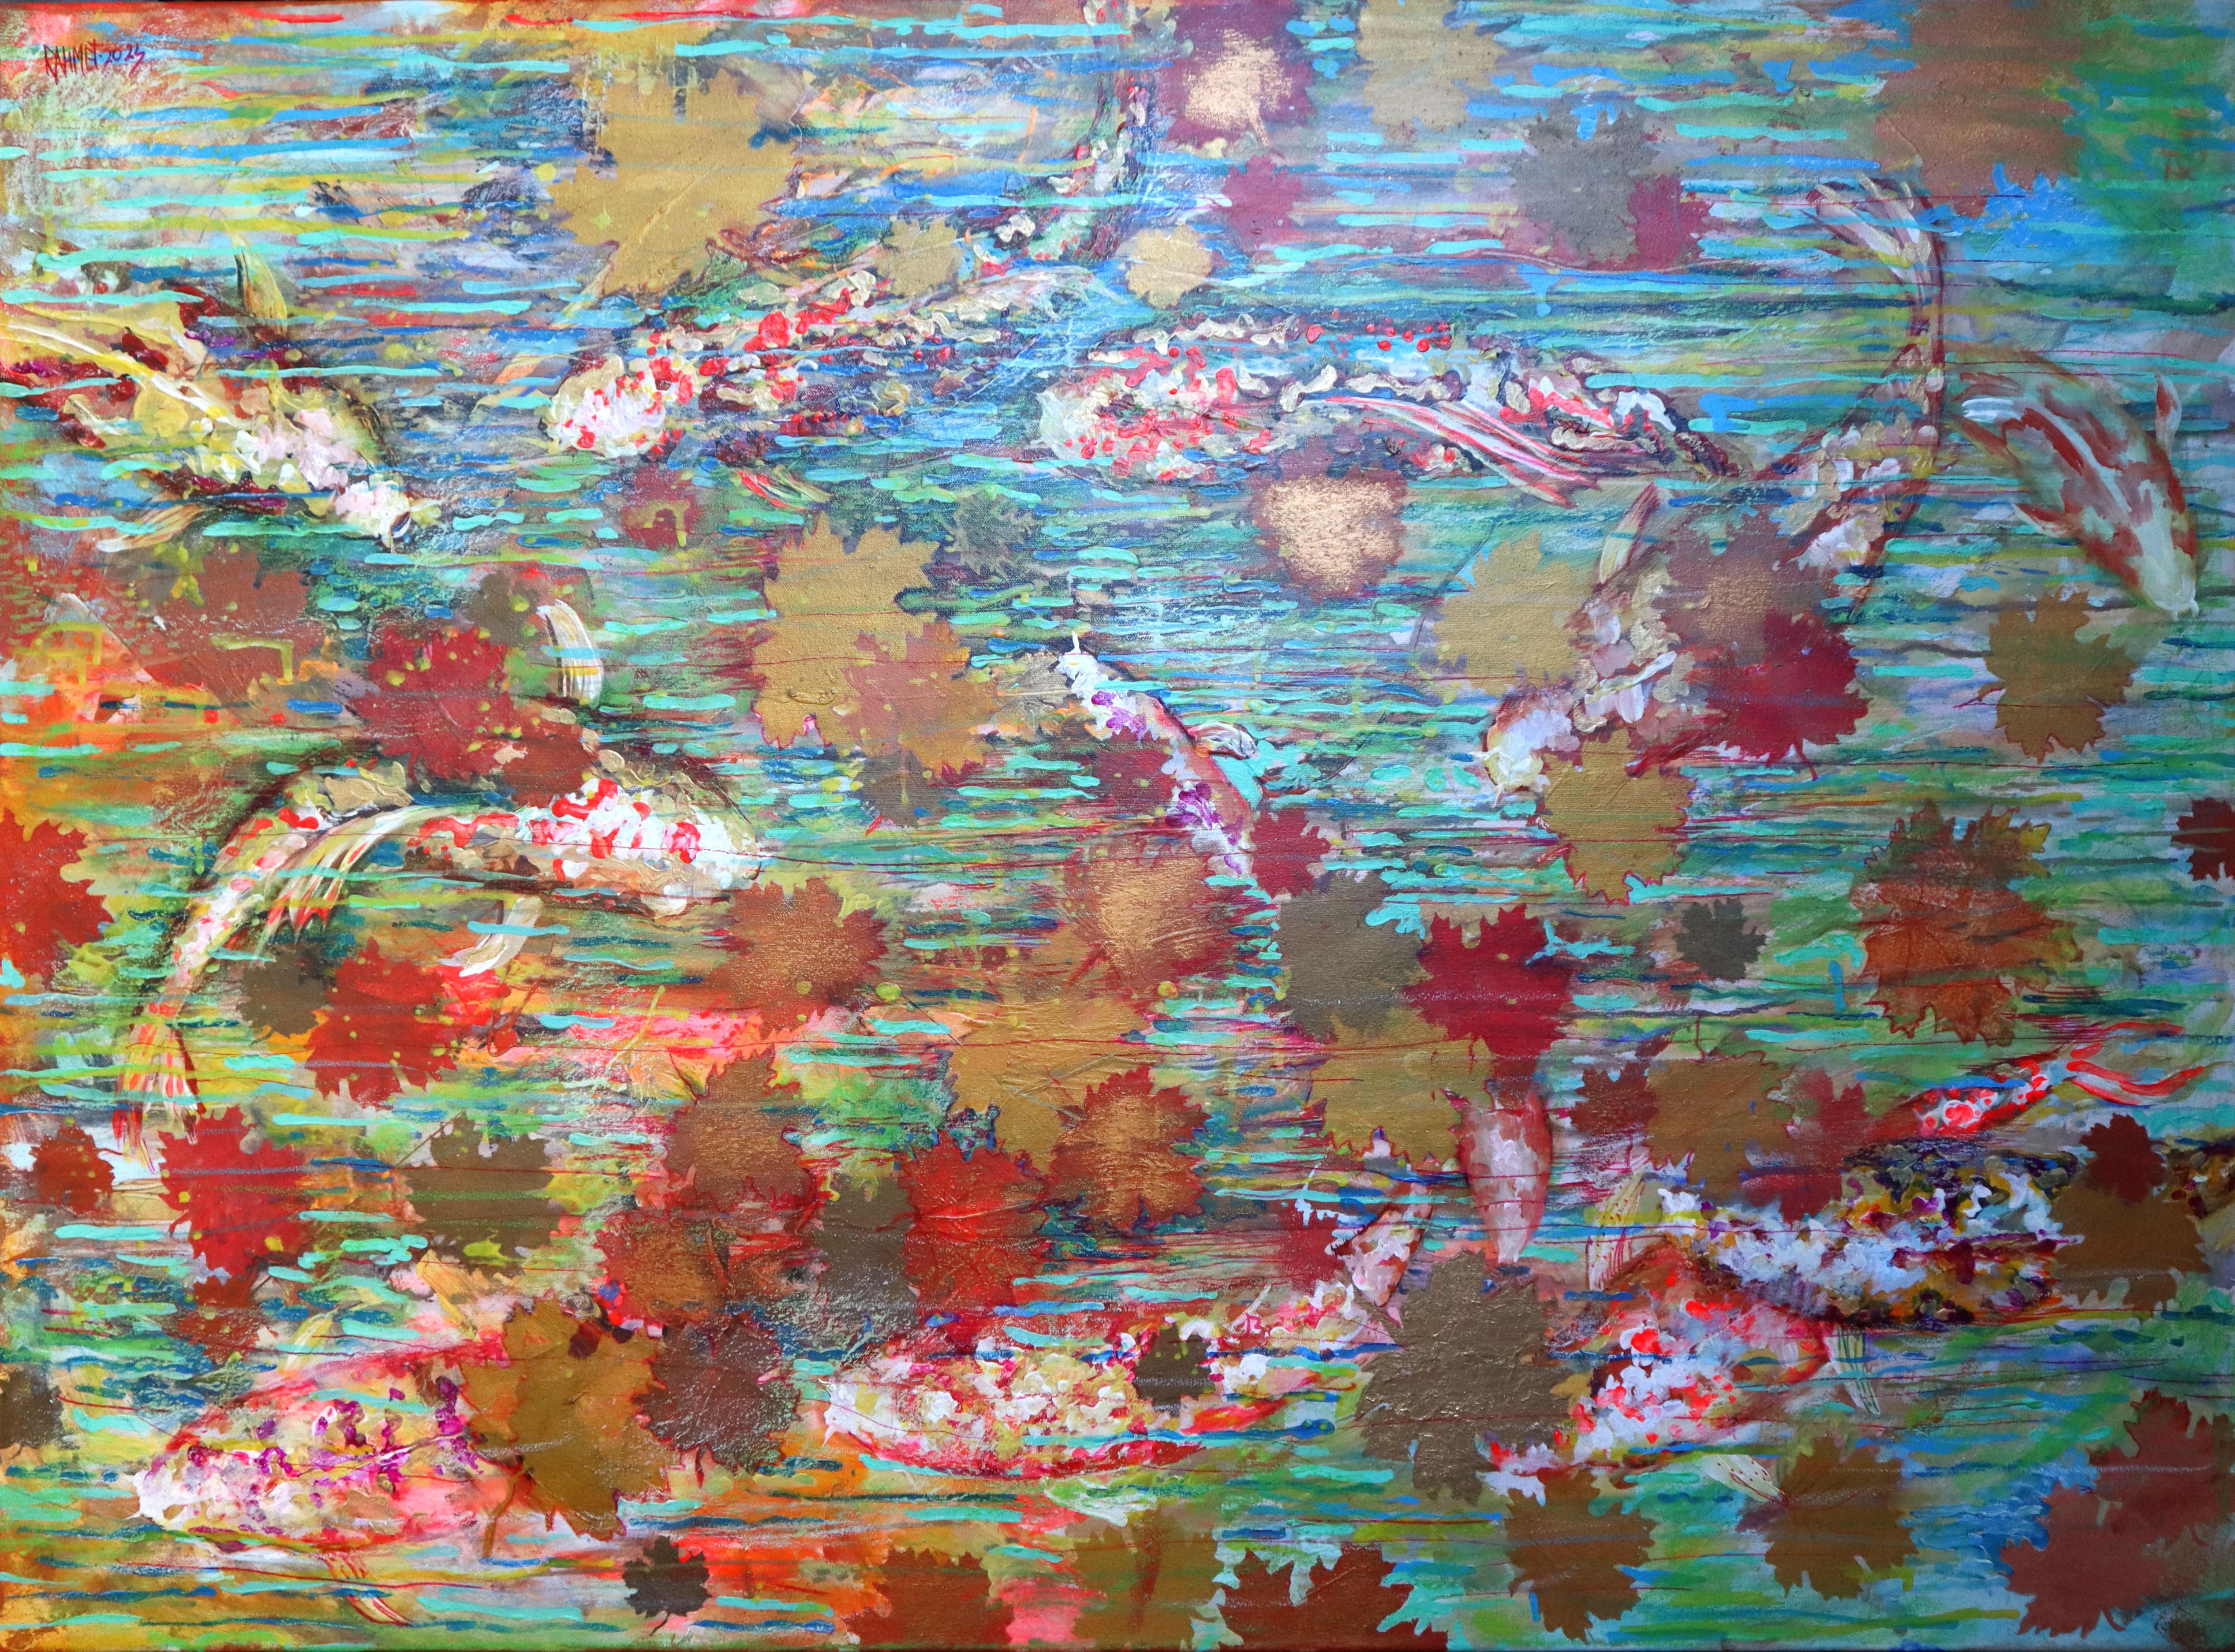 RAKHMET REDZHEPOV (RAMZI) Interior Painting - Koi Fish in a Slow Flowing River